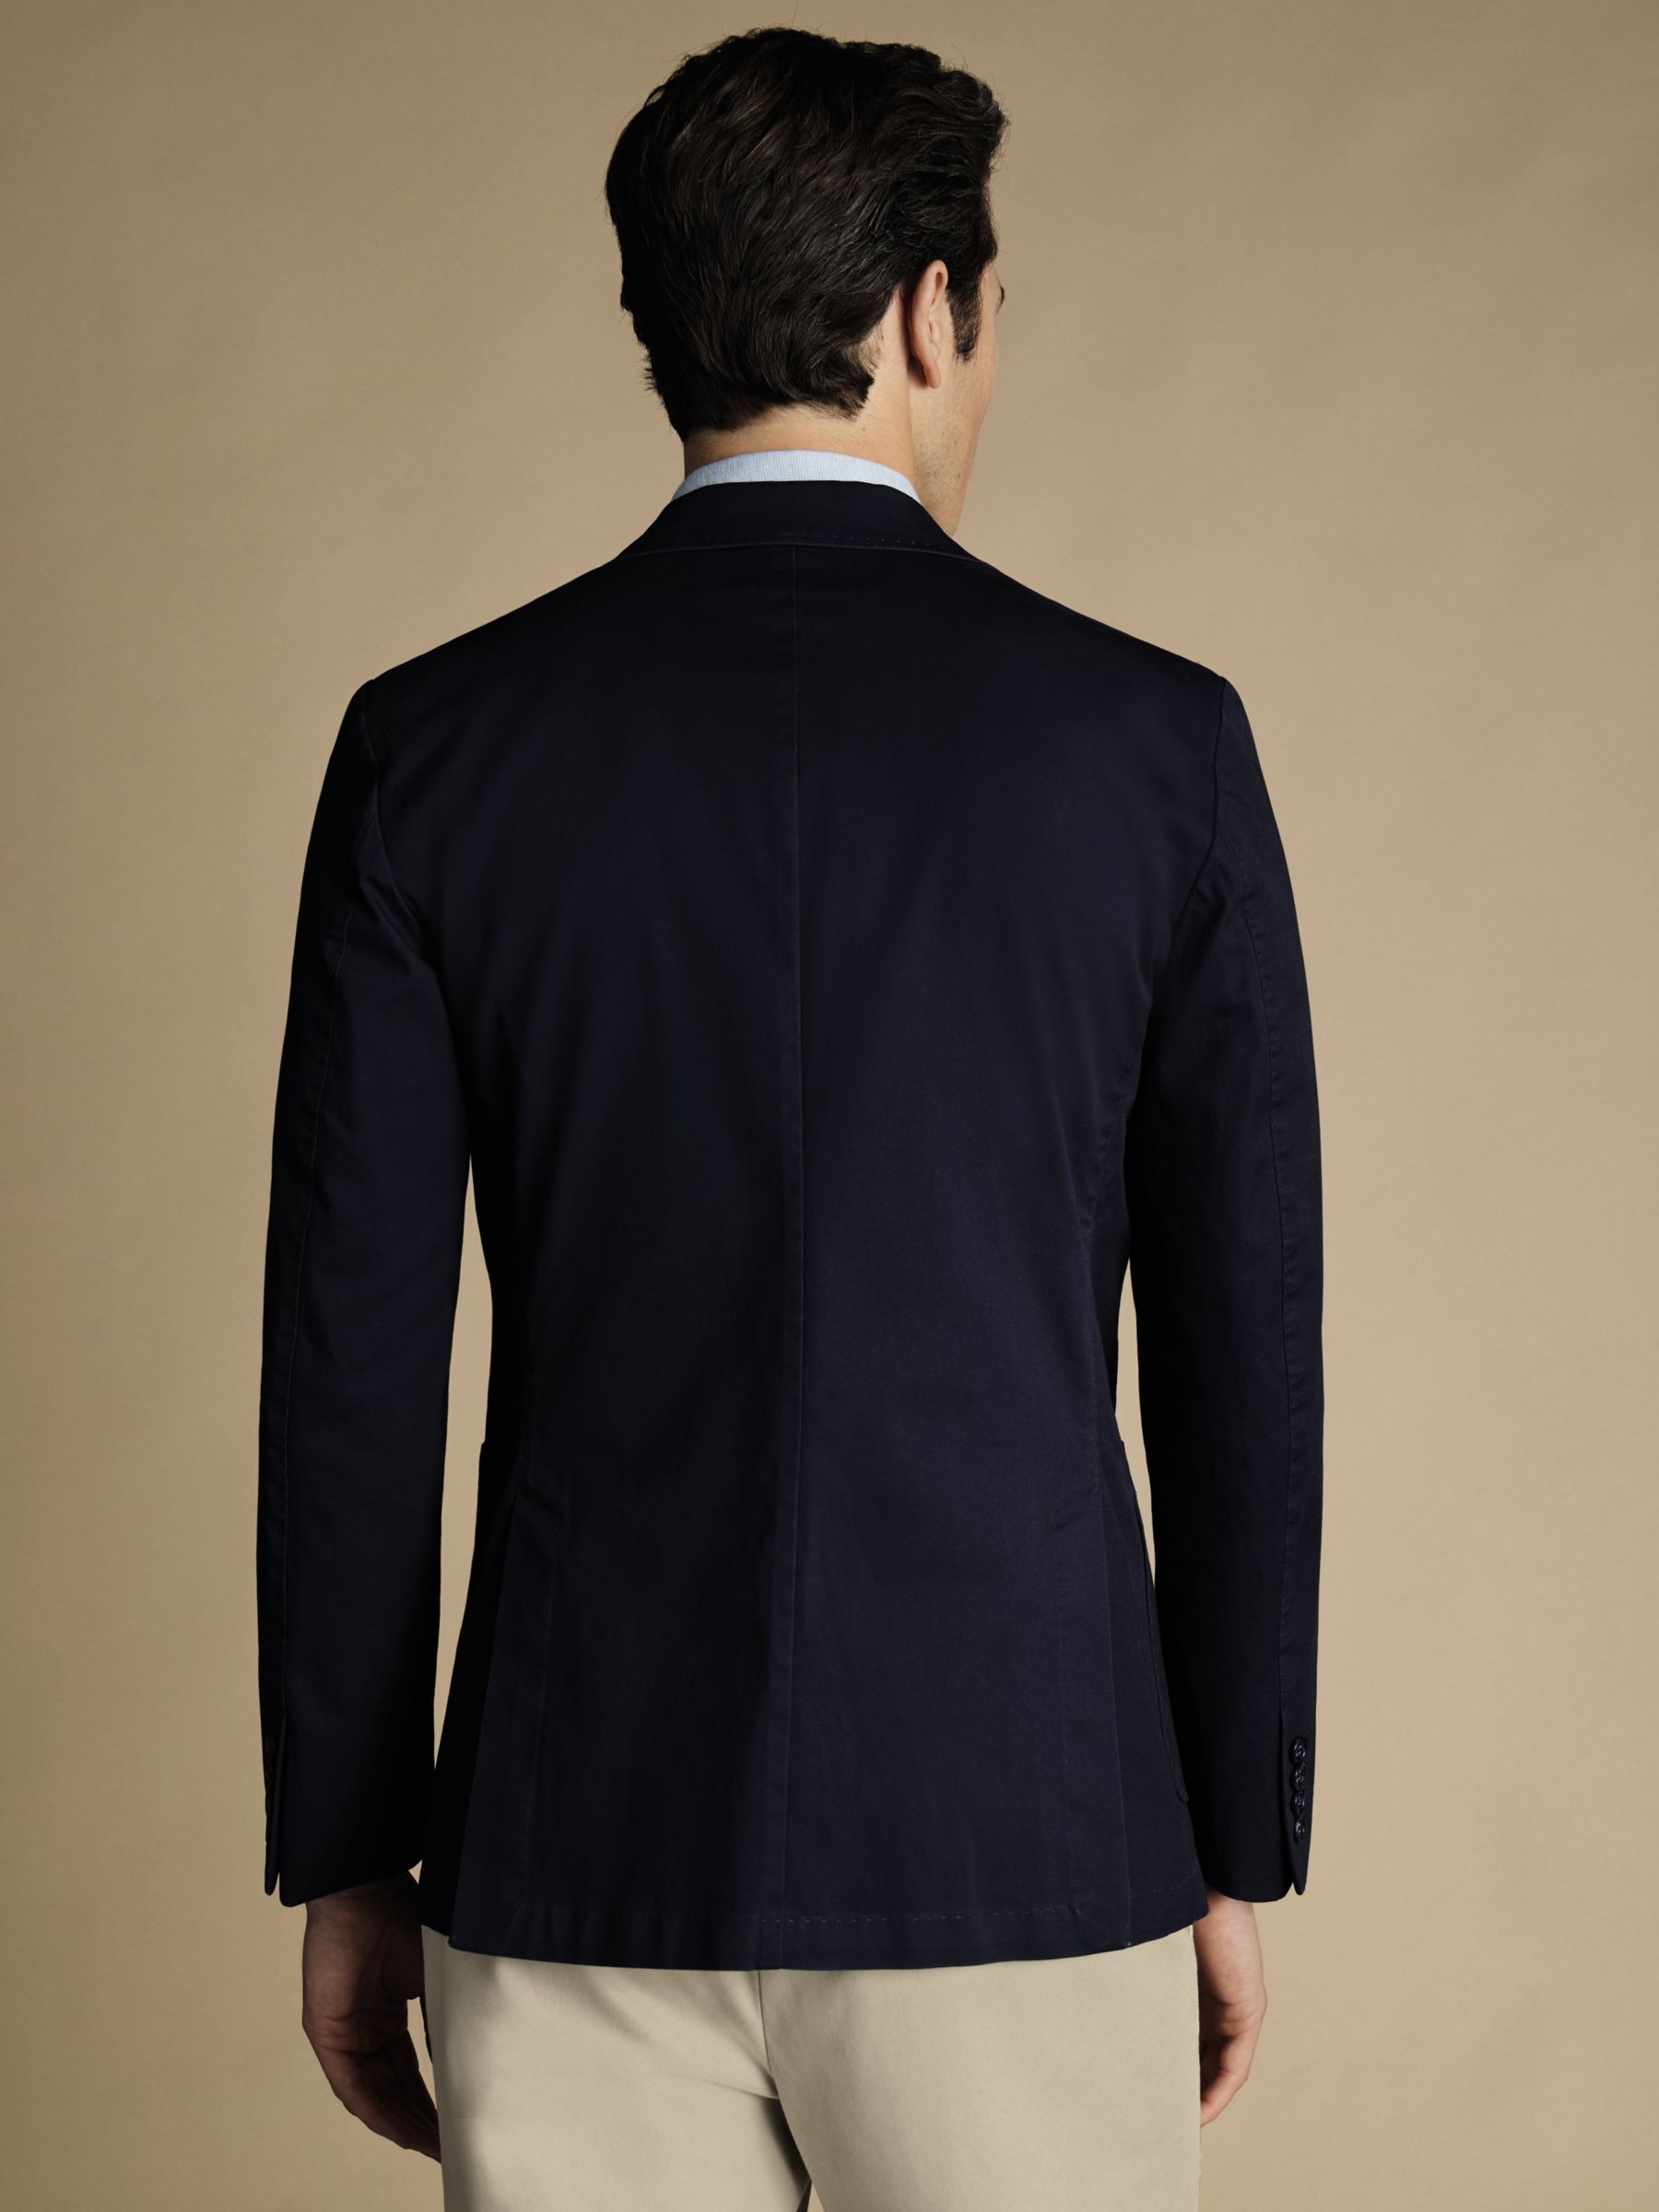 Buy Charles Tyrwhitt Cotton Blend Stretch Slim Fit Blazer, Navy Online at johnlewis.com